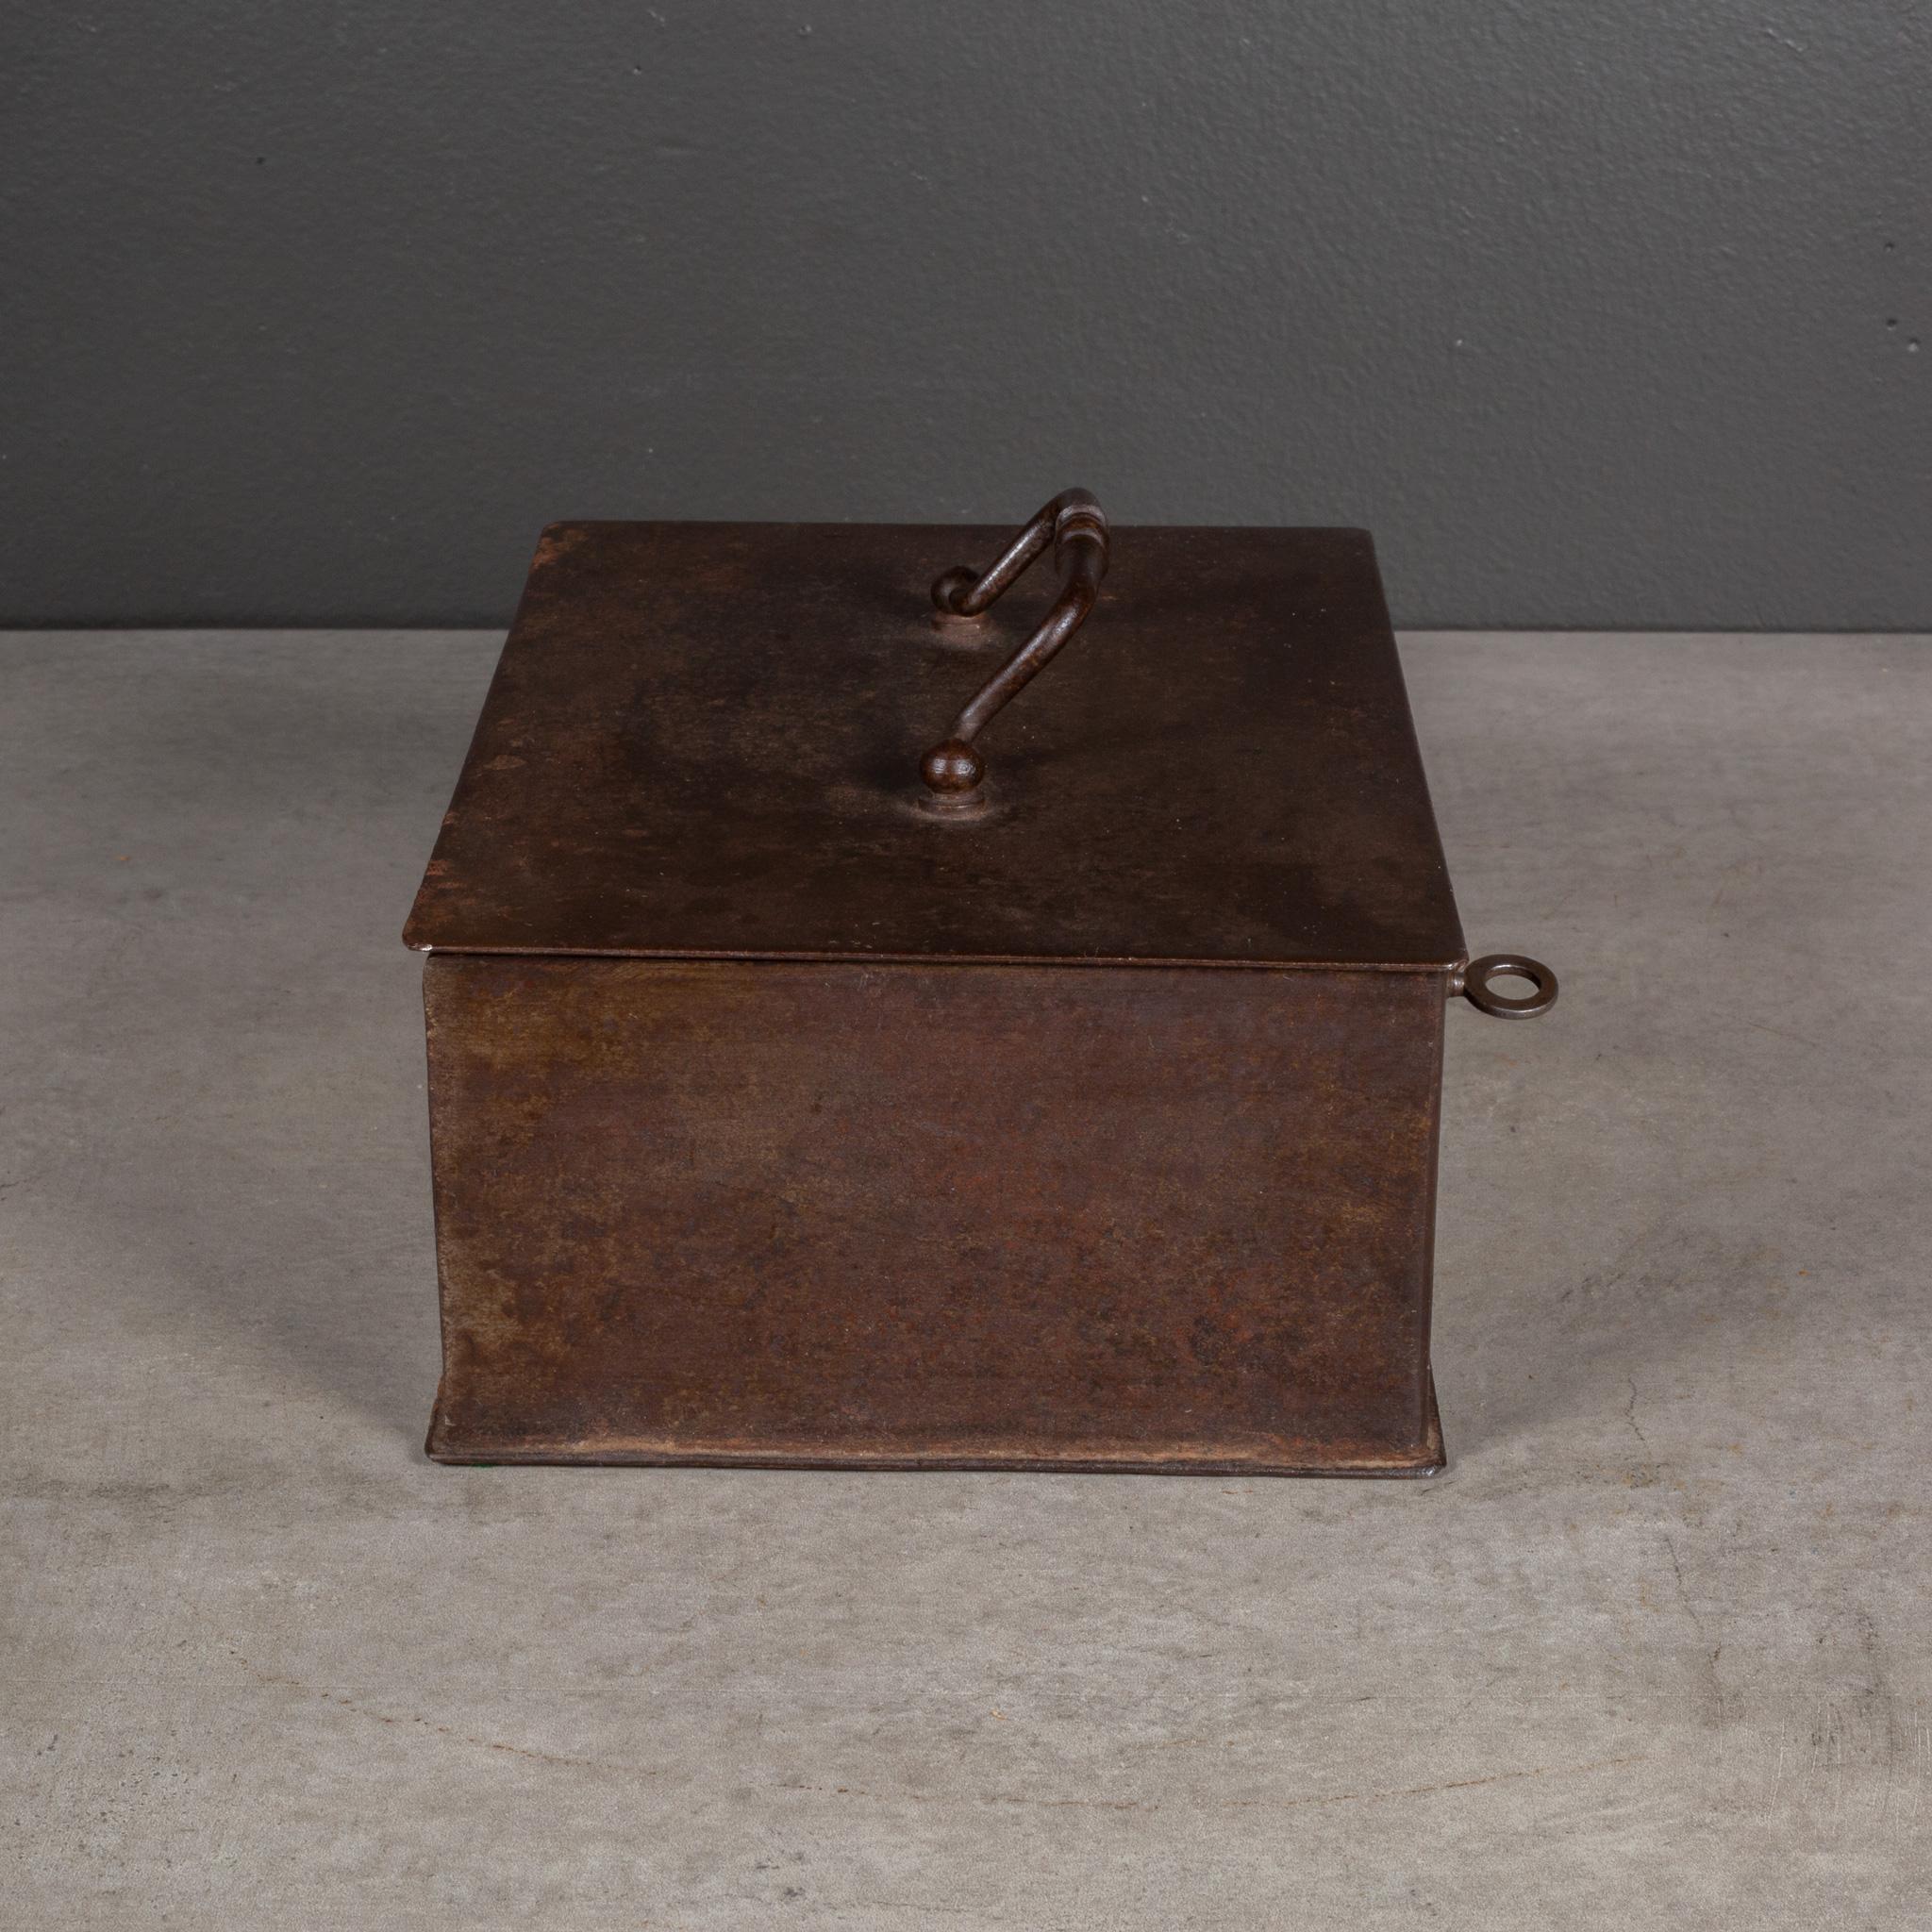 19th Century 19th c. Steel Lockbox with Key